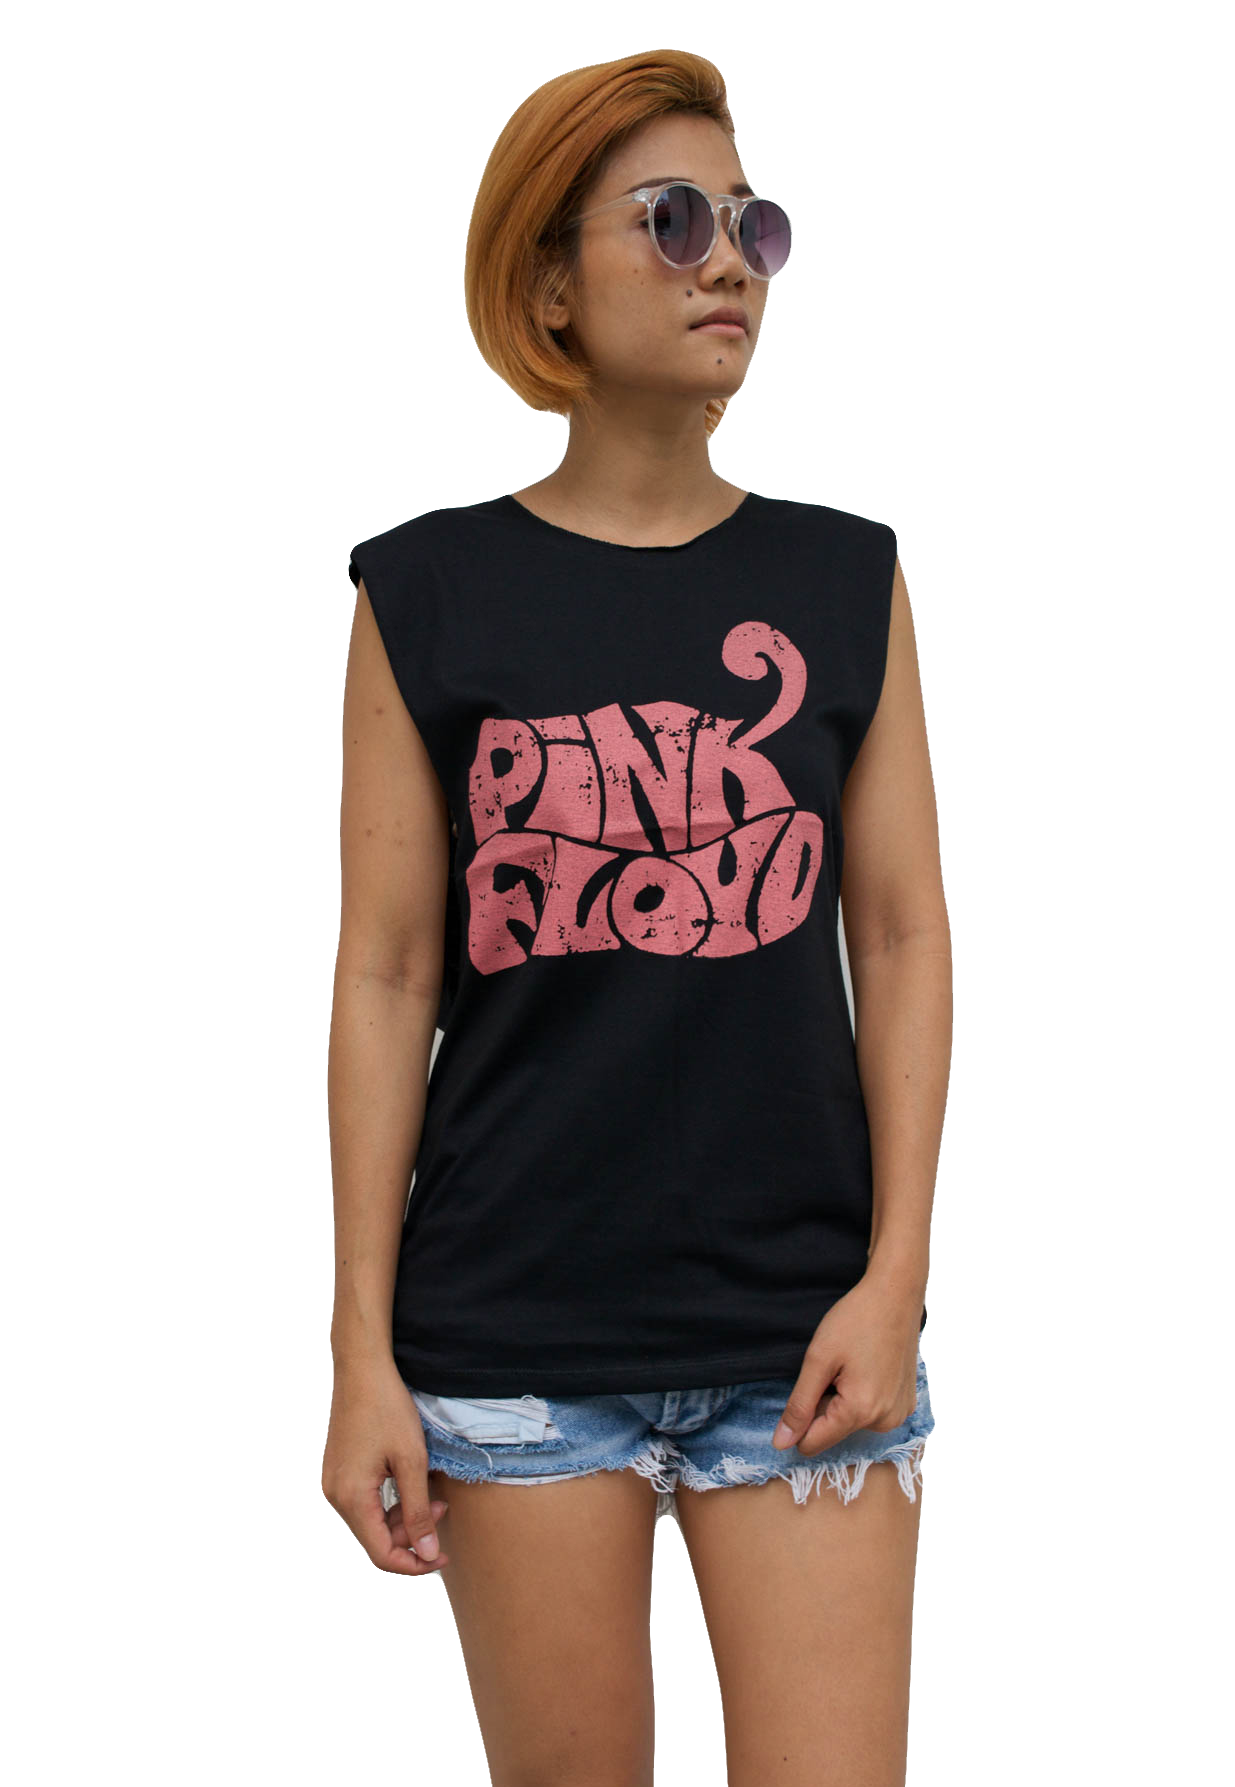 Ladies Pink Floyd Vest Tank-Top Singlet Sleeveless T-Shirt